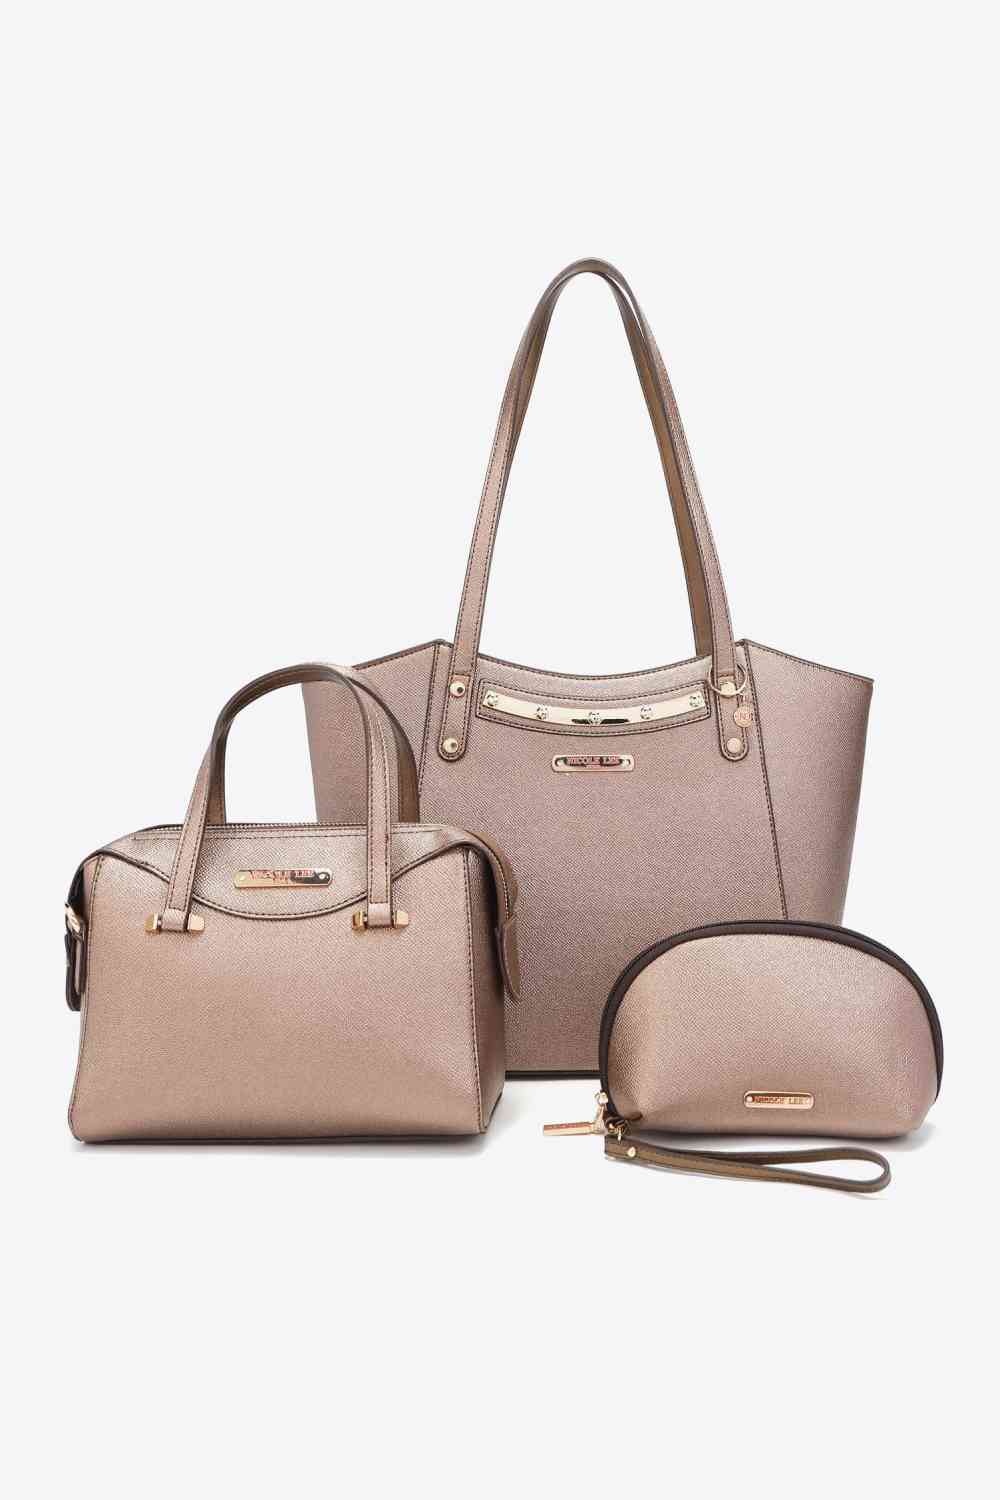 The802Gypsy Handbags, Wallets & Cases Camel / One Size GYPSY-Nicole Lee USA-At My Best Handbag Set